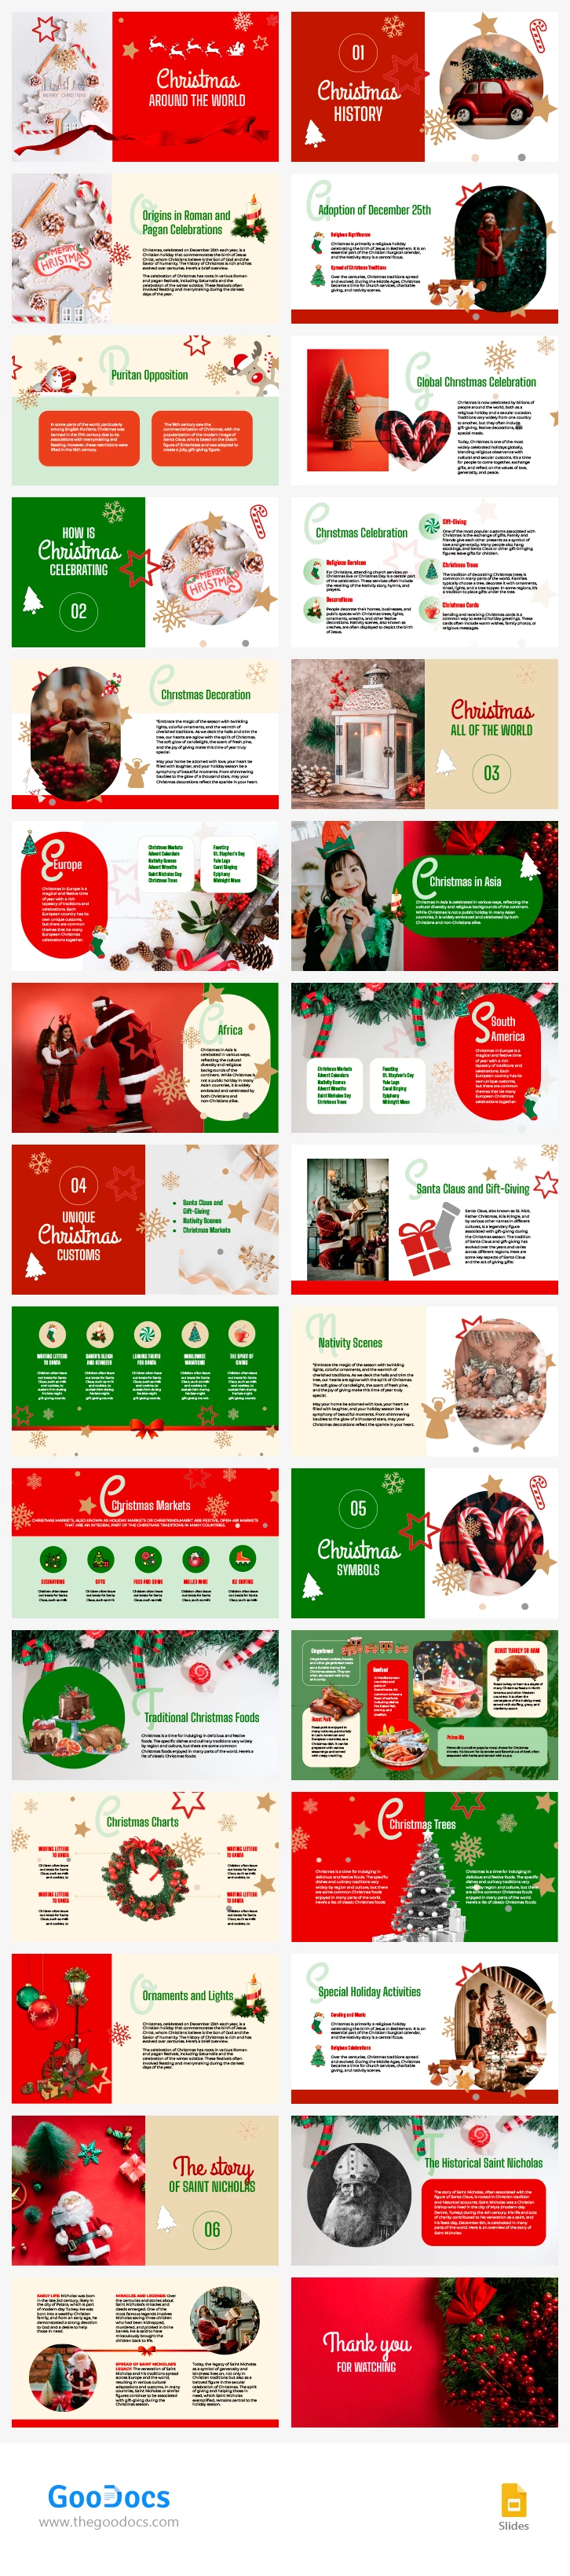 Natale nel mondo. - free Google Docs Template - 10067303